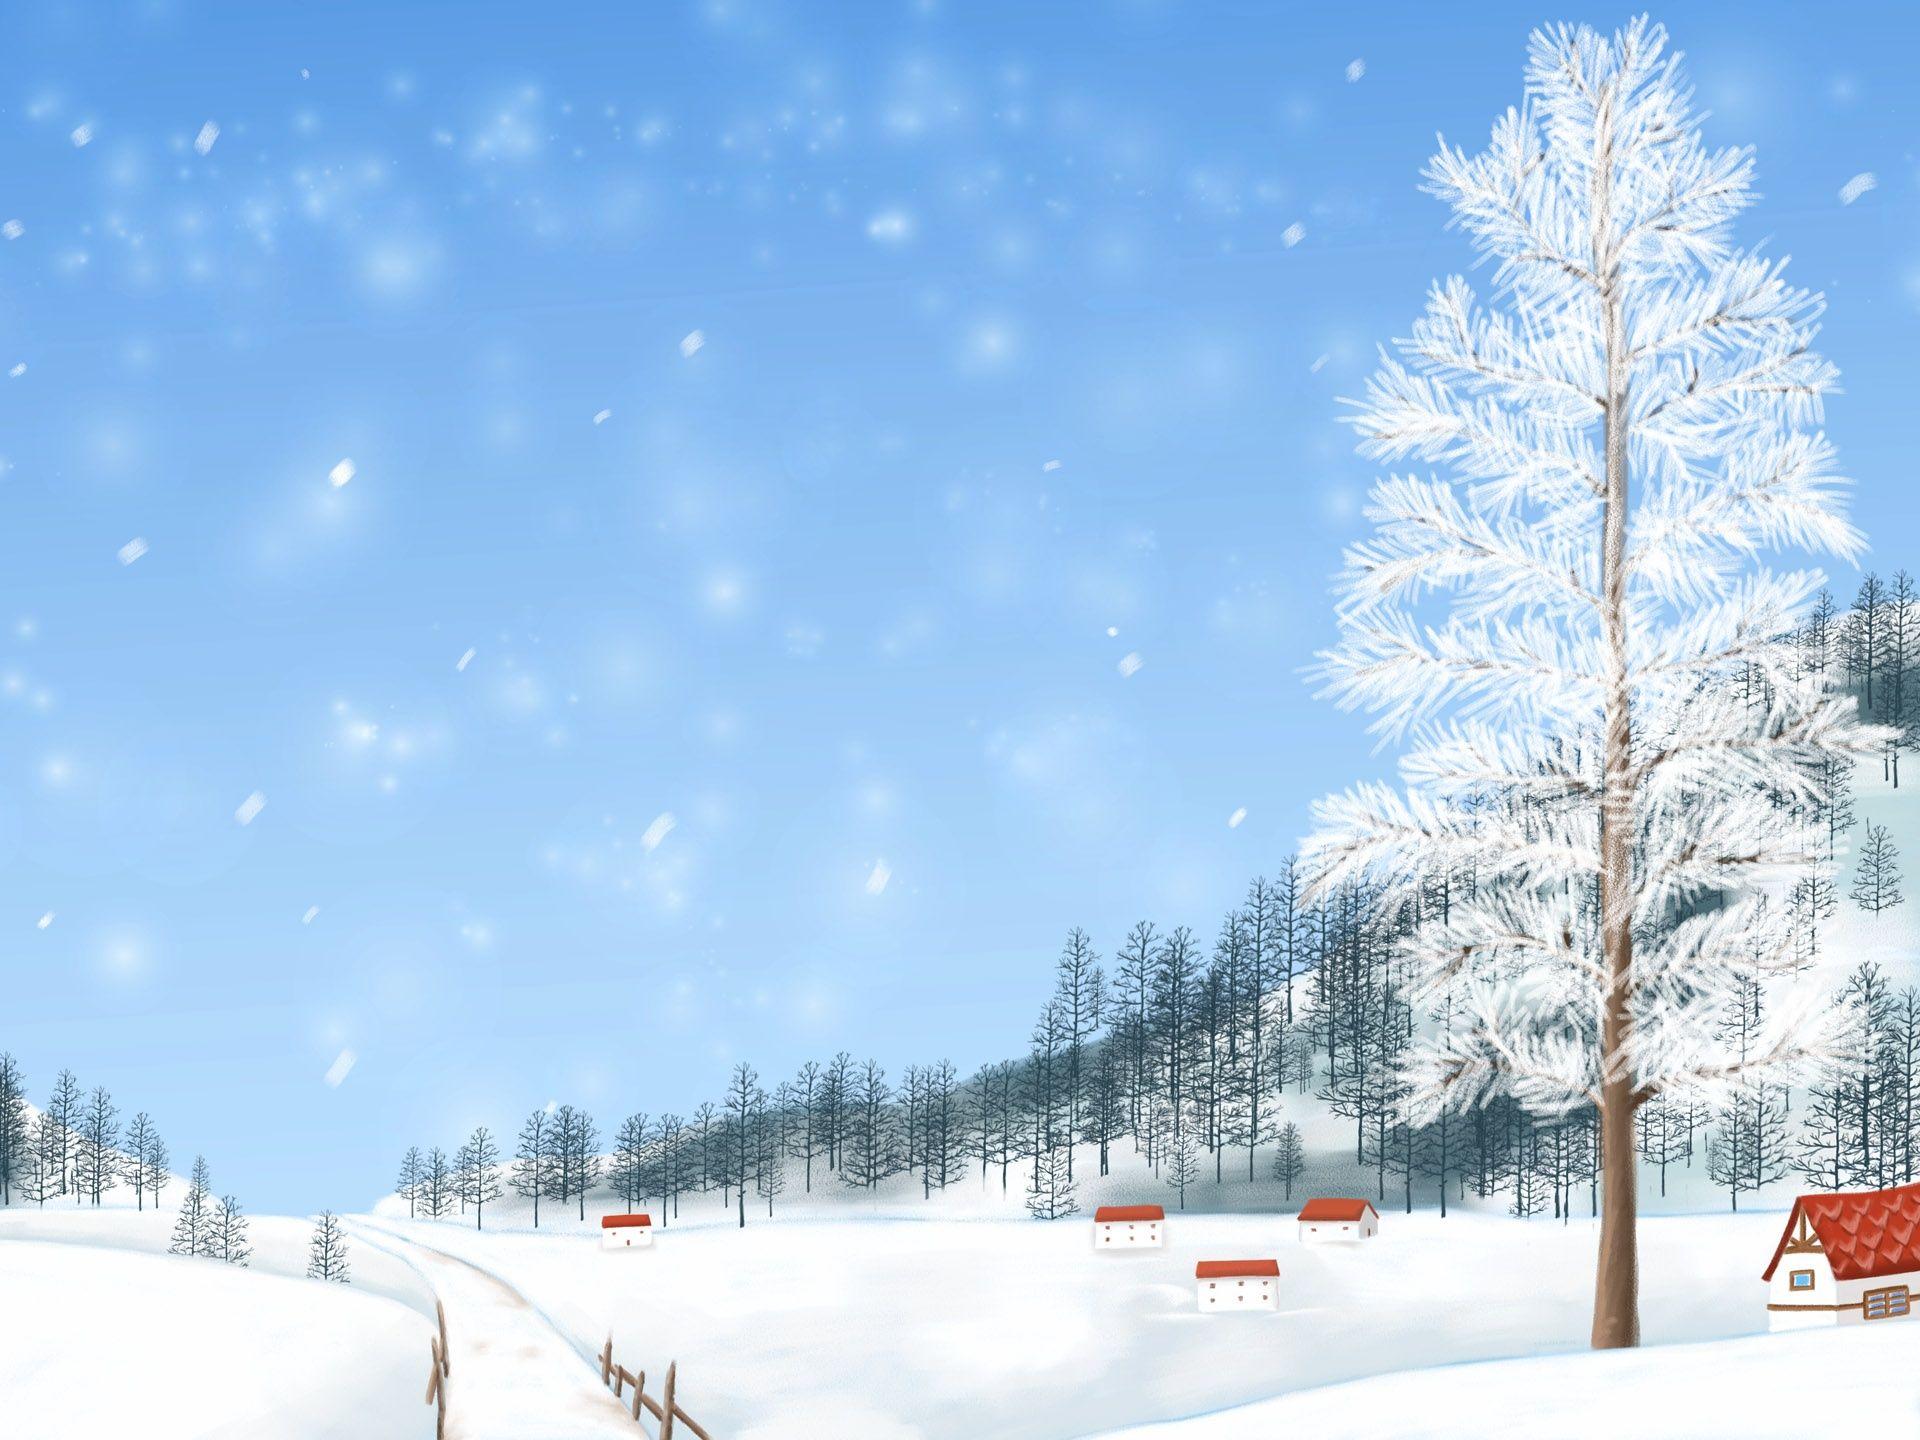 Winter Season Image wallpaper (62 Wallpaper)